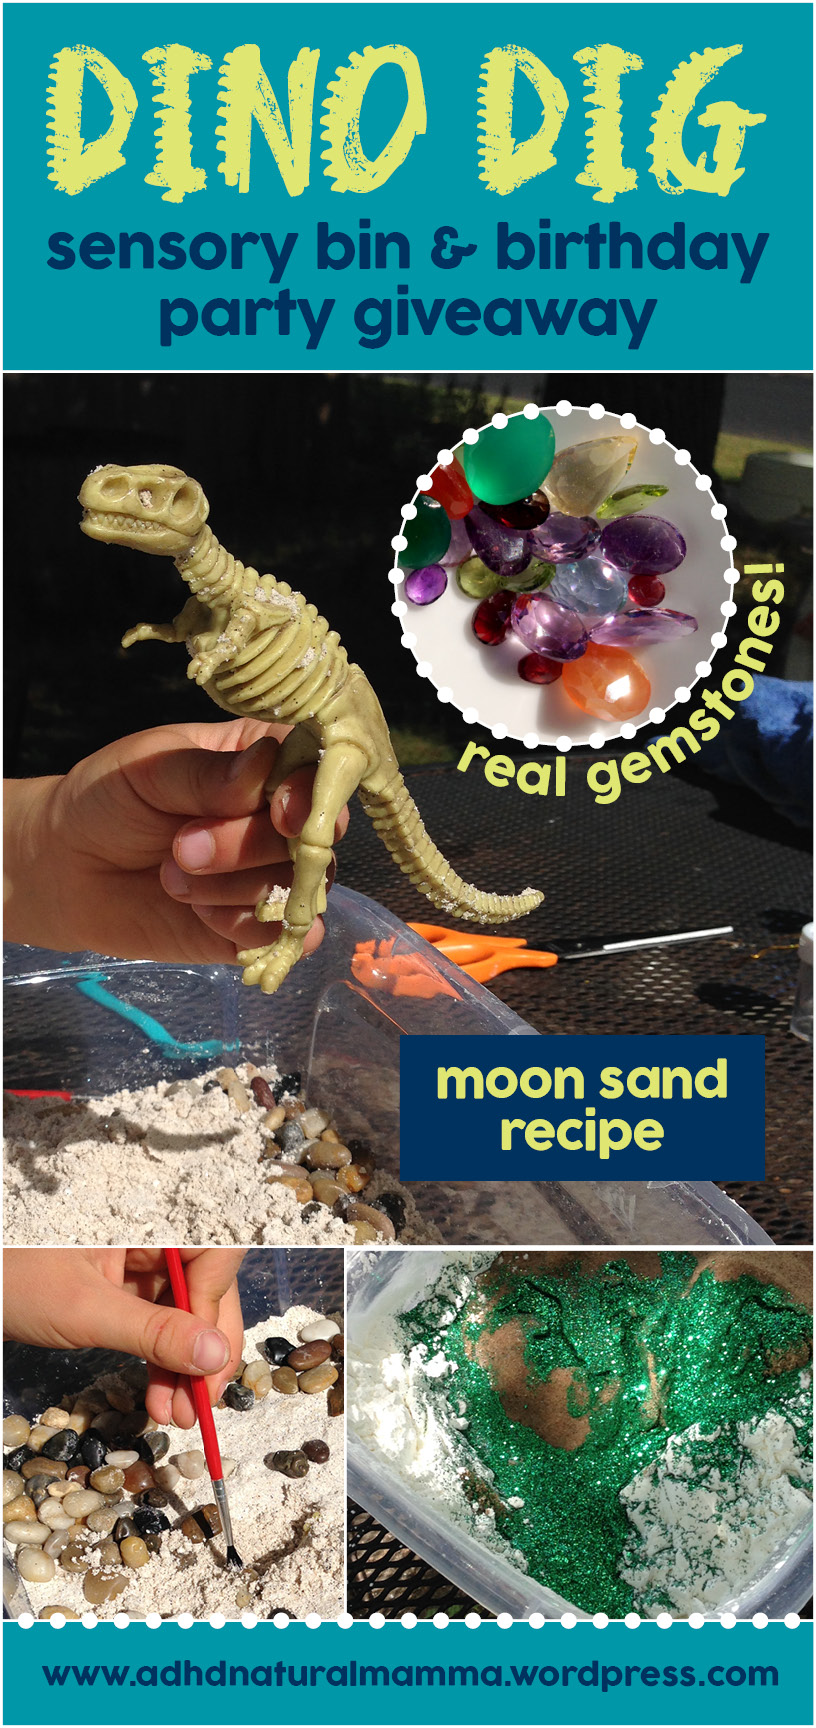 Dinosaur dig sensory bin and birthday party giveaway favor - paleontology excavation - moon sand recipe - dino fossils - real gemstones and seashells - sensory processing disorder - adhd - play - imagination